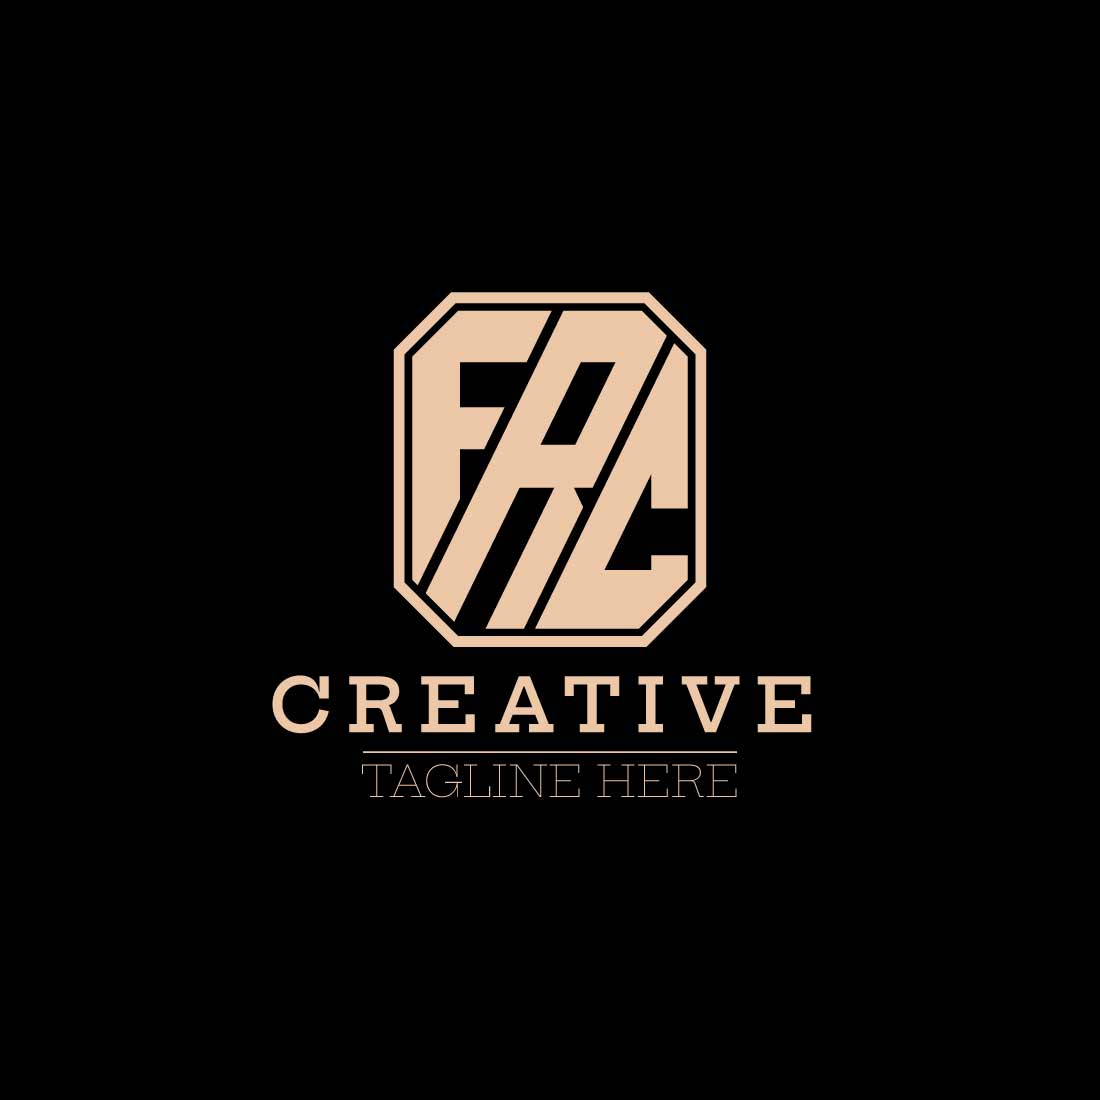 Professional letter FRC logo design preview image.